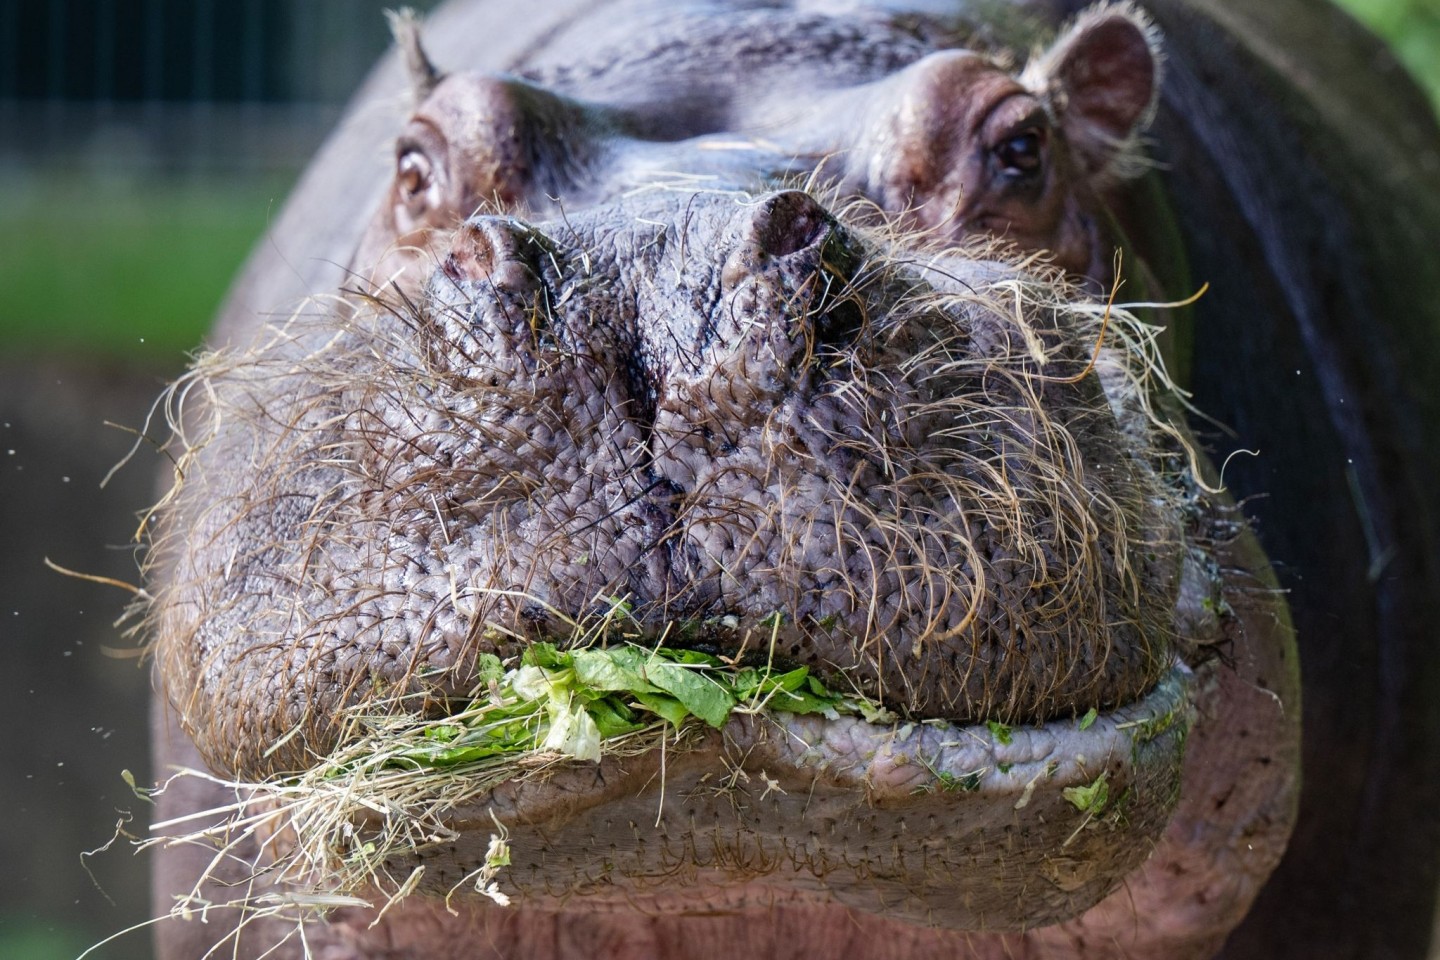 Artgerechte Ernährung: Ein Flusspferd lässt sich im Berliner Zoo Heu und Salat schmecken.